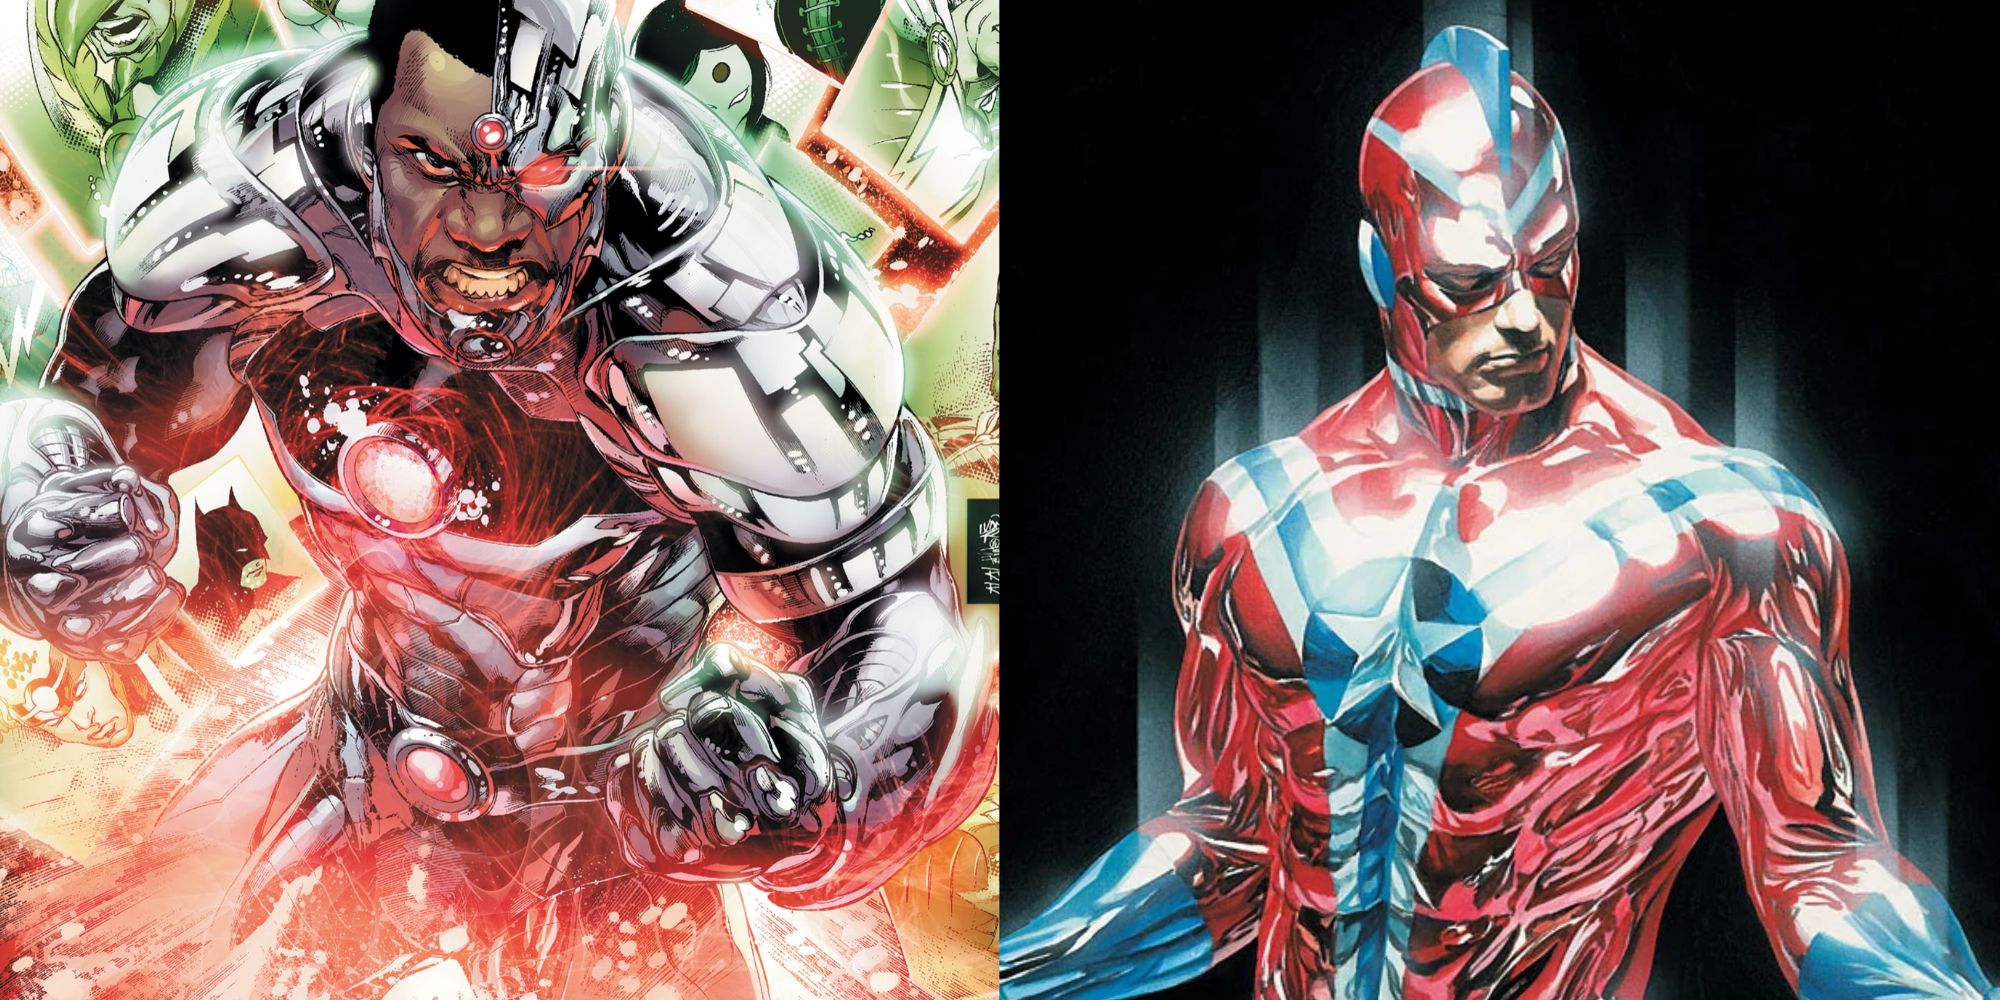 A split image of DC Comics' Cyborg and Citizen Steel.